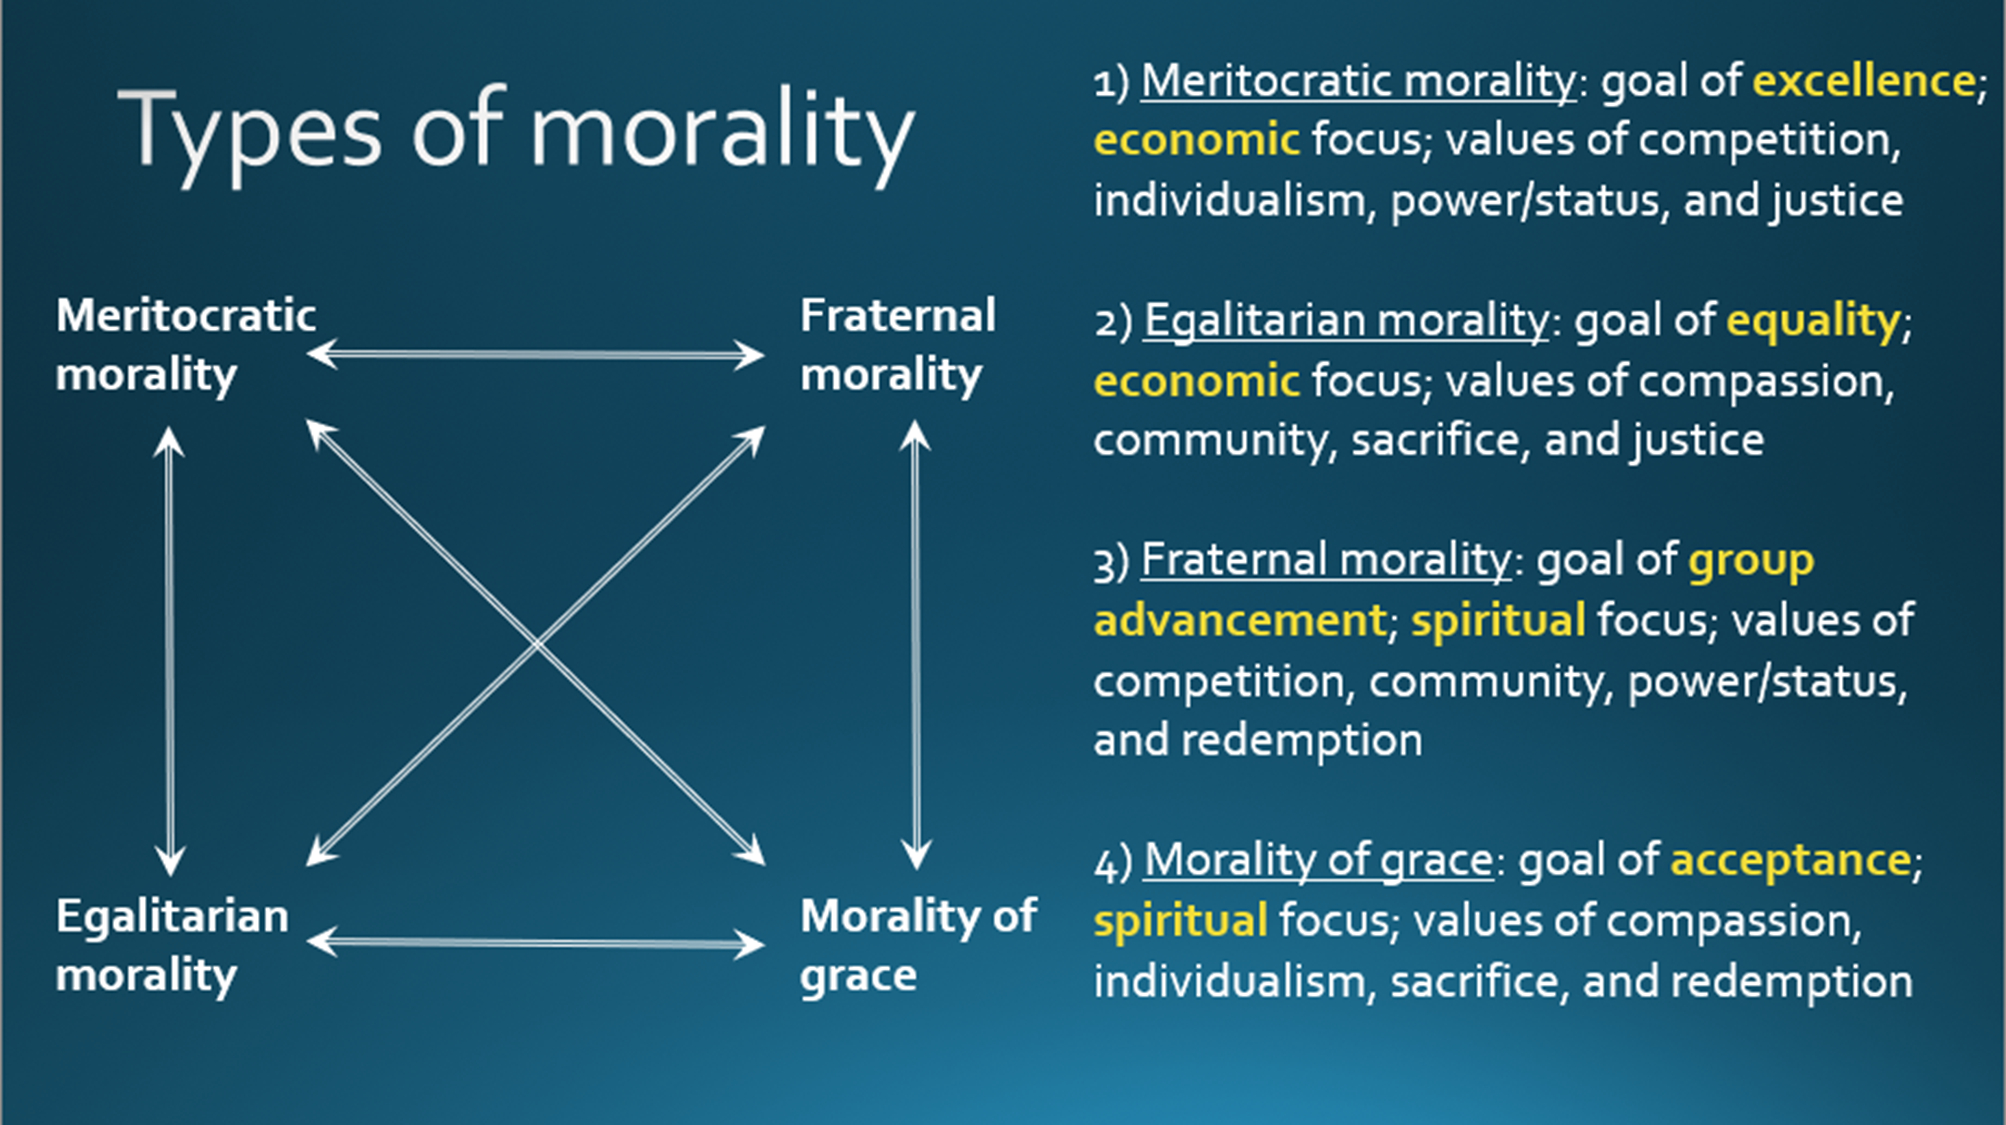 Diagram depicting meritocratic morality, fraternal morality, egalitarian morality, and the morality of grace.